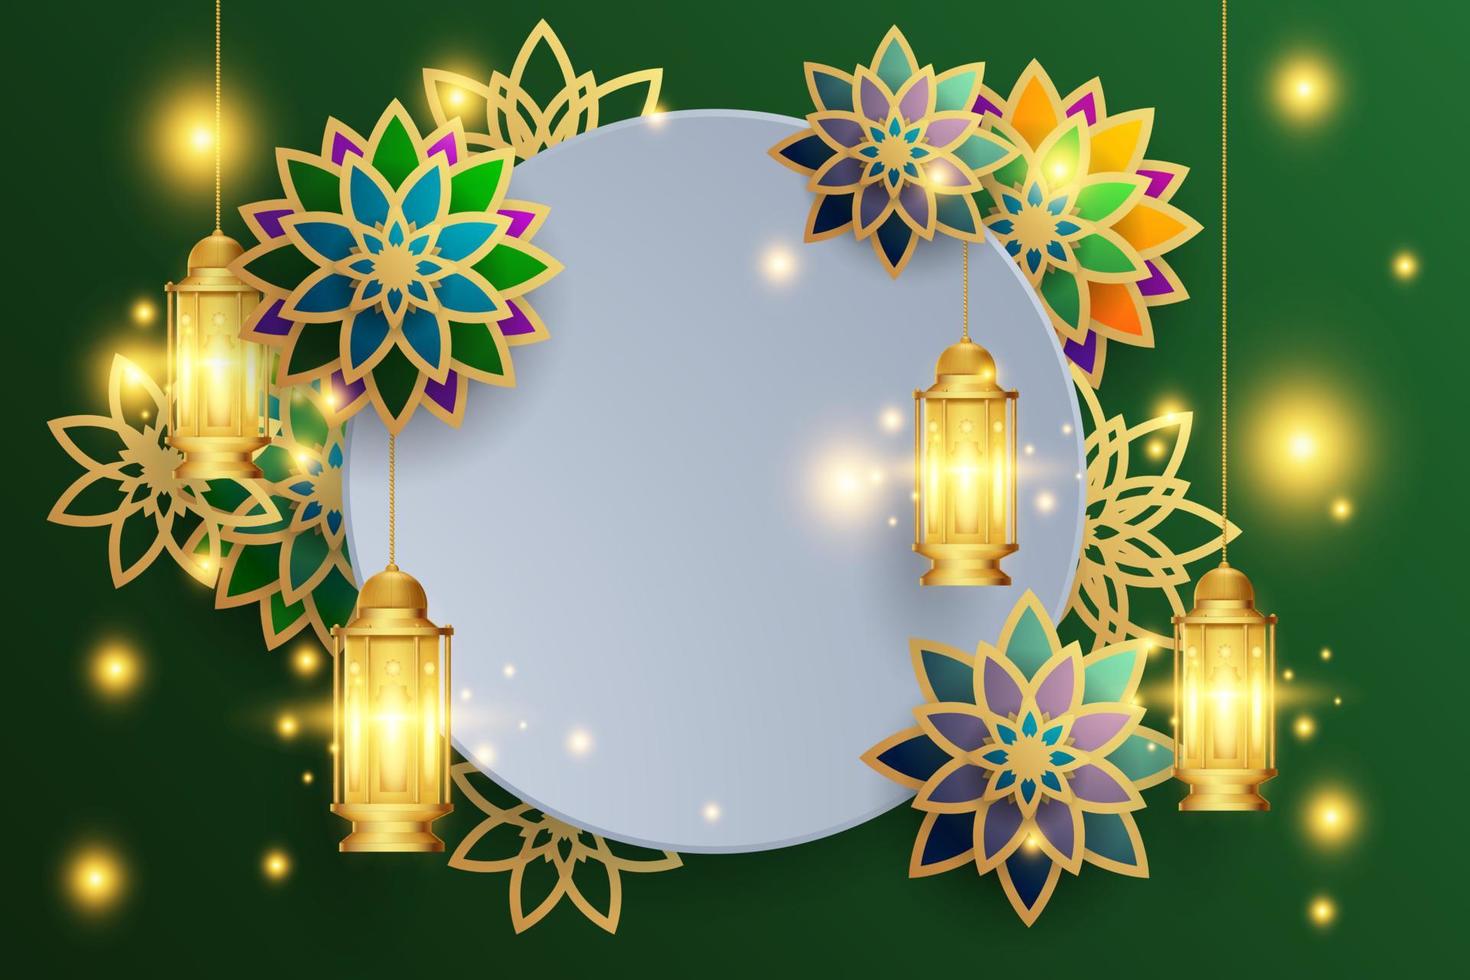 Eid mubarak greeting card background with islamic ornament vector illustration